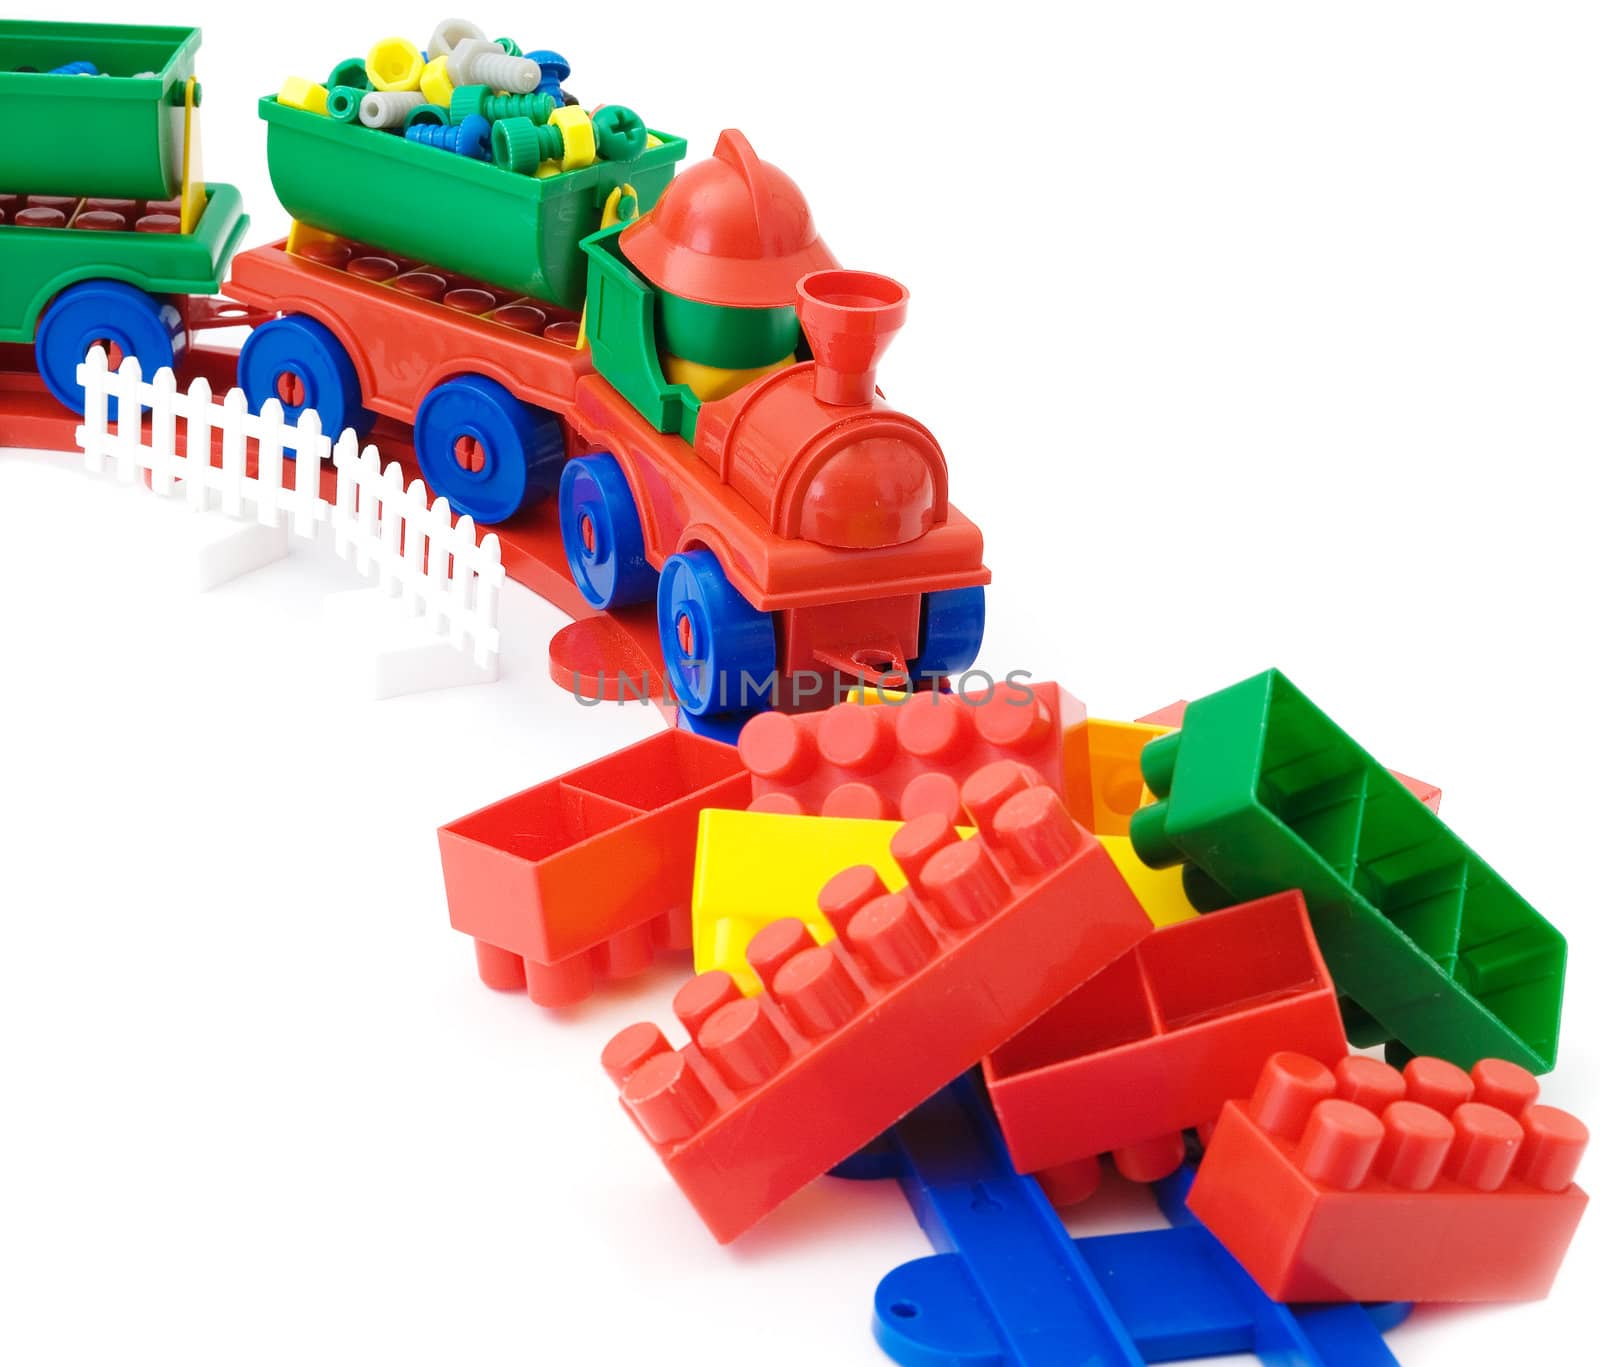 Toy railway by pzaxe